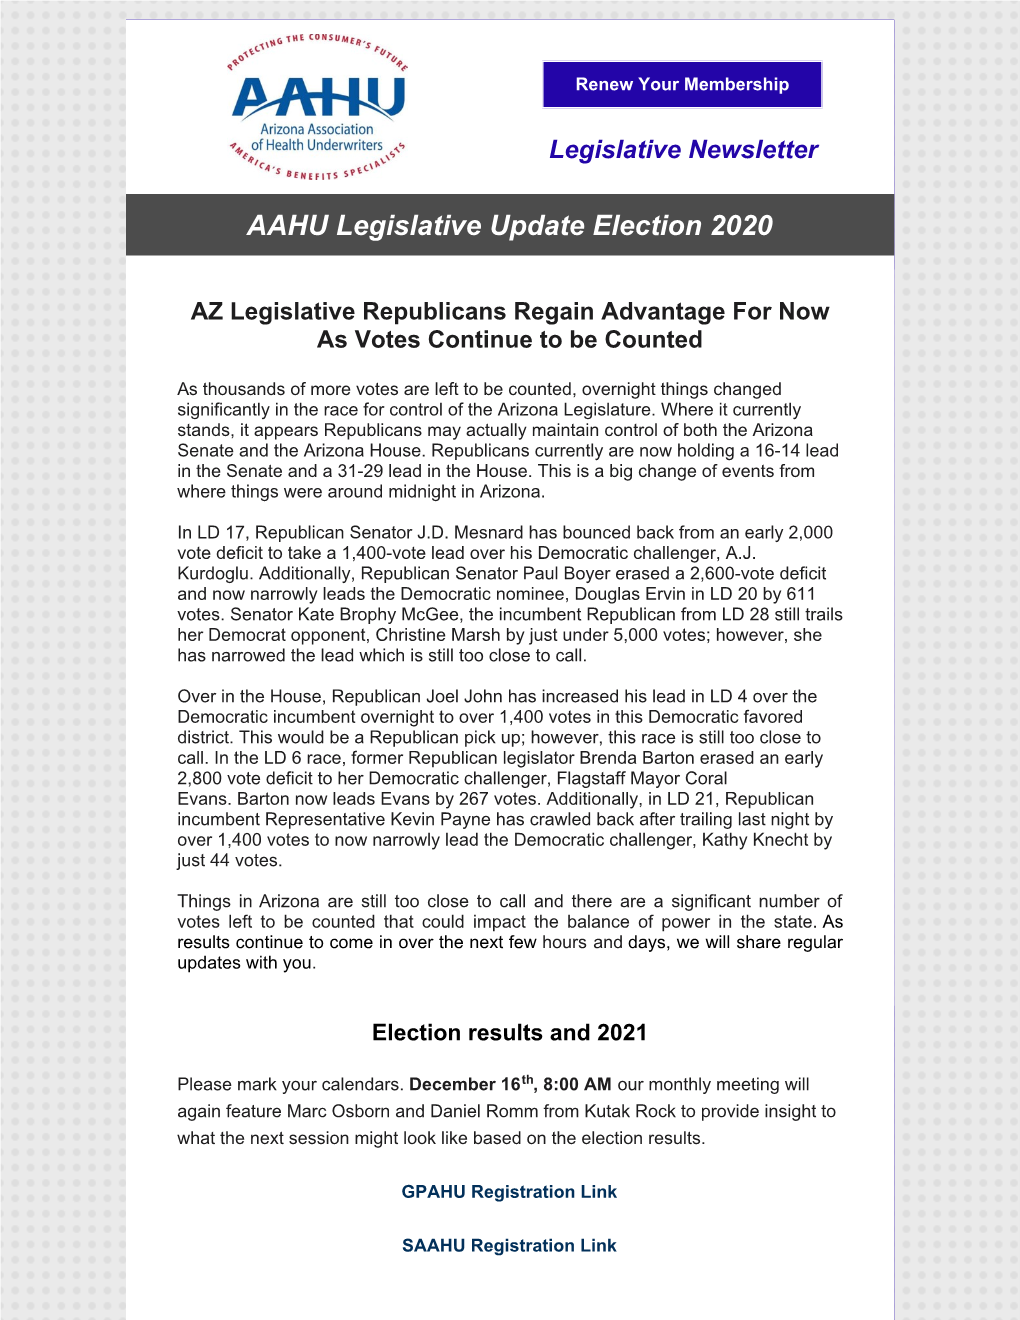 AAHU Legislative Update Election 2020